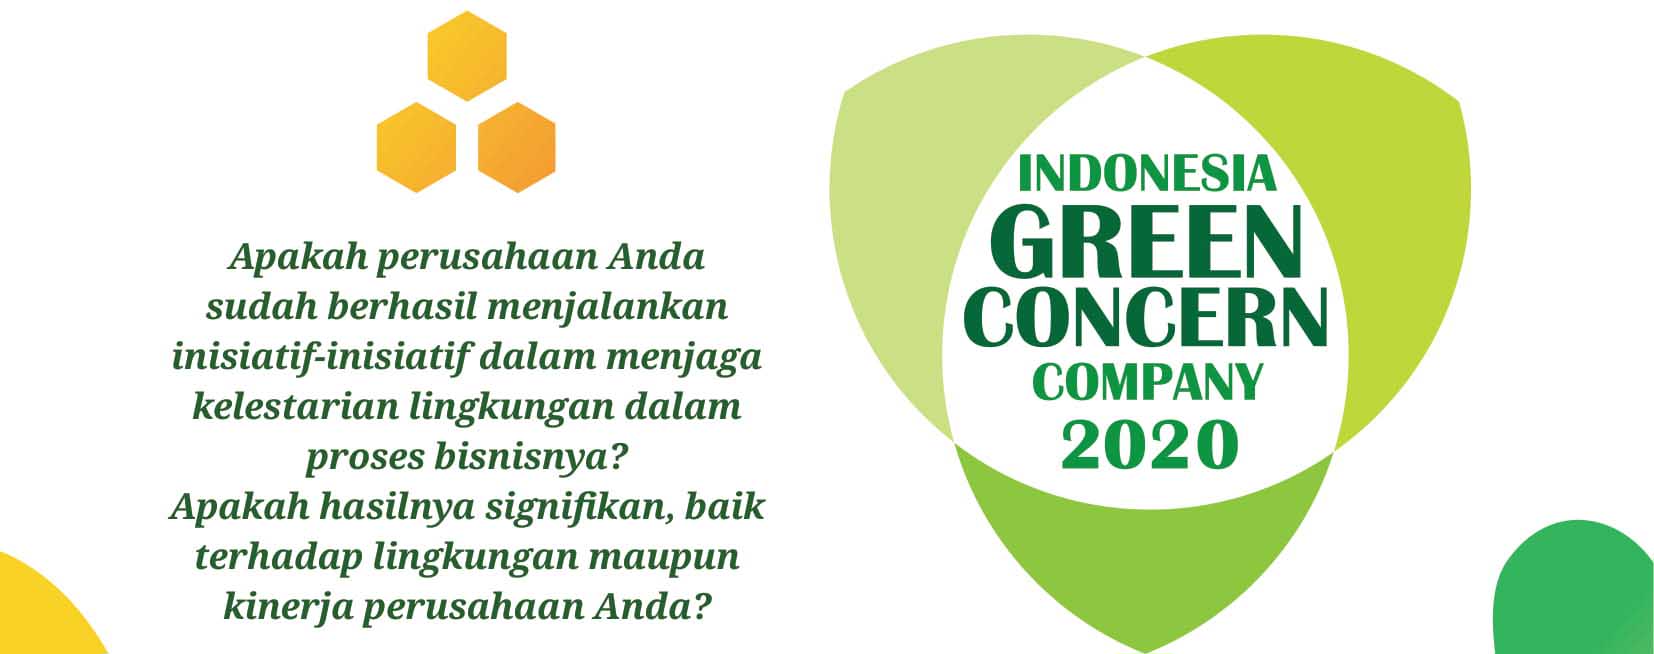 Indonesia Green Concern Company 2020